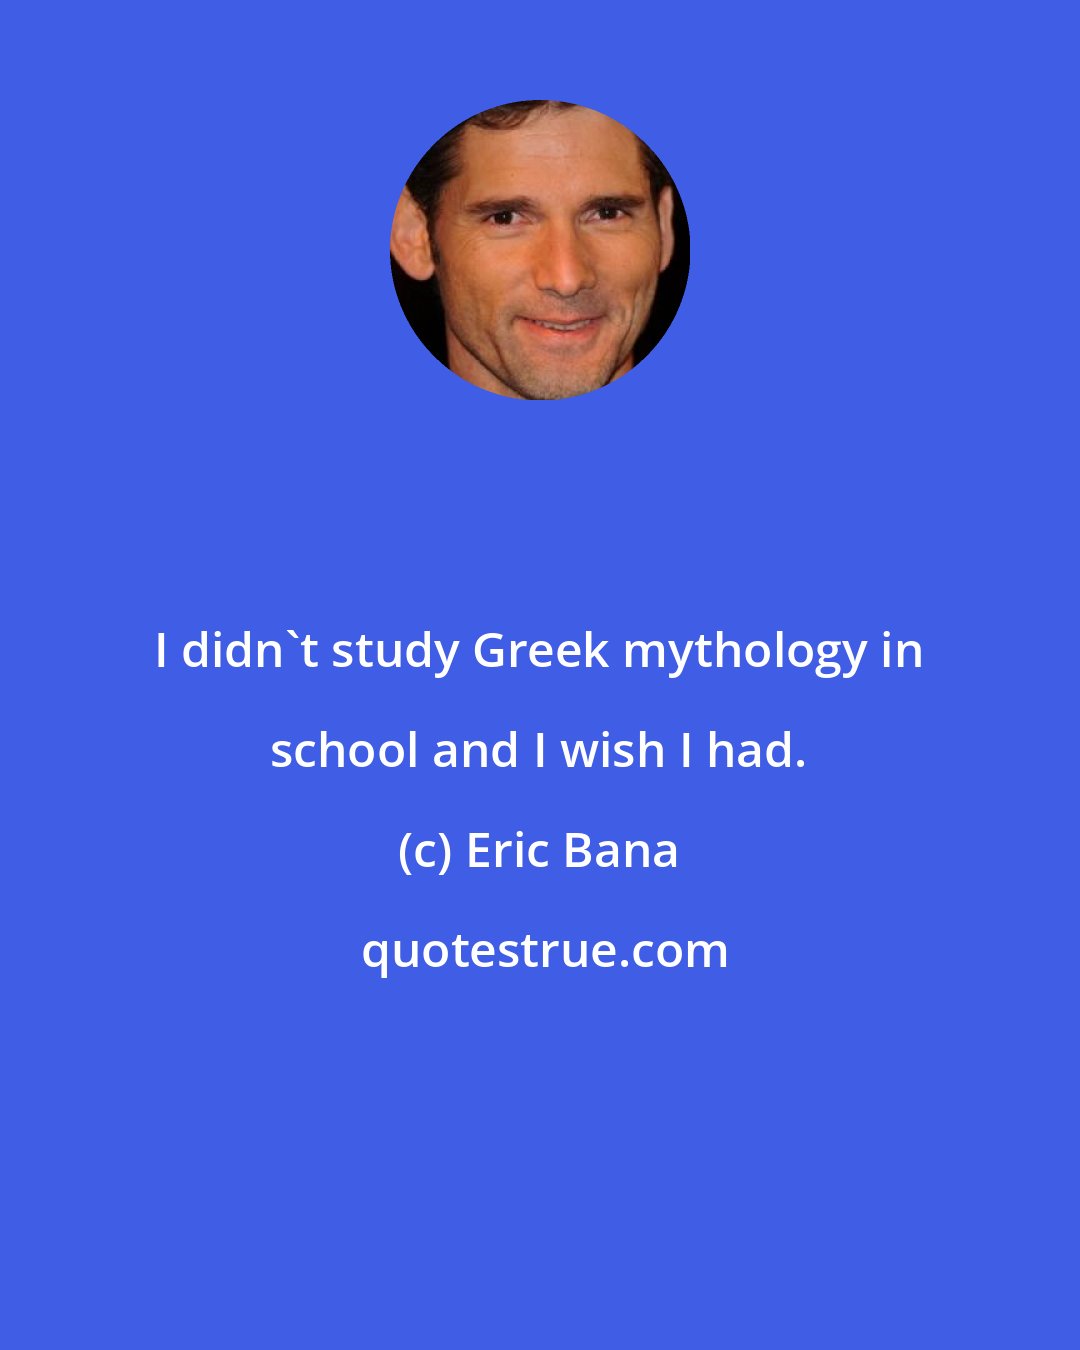 Eric Bana: I didn't study Greek mythology in school and I wish I had.